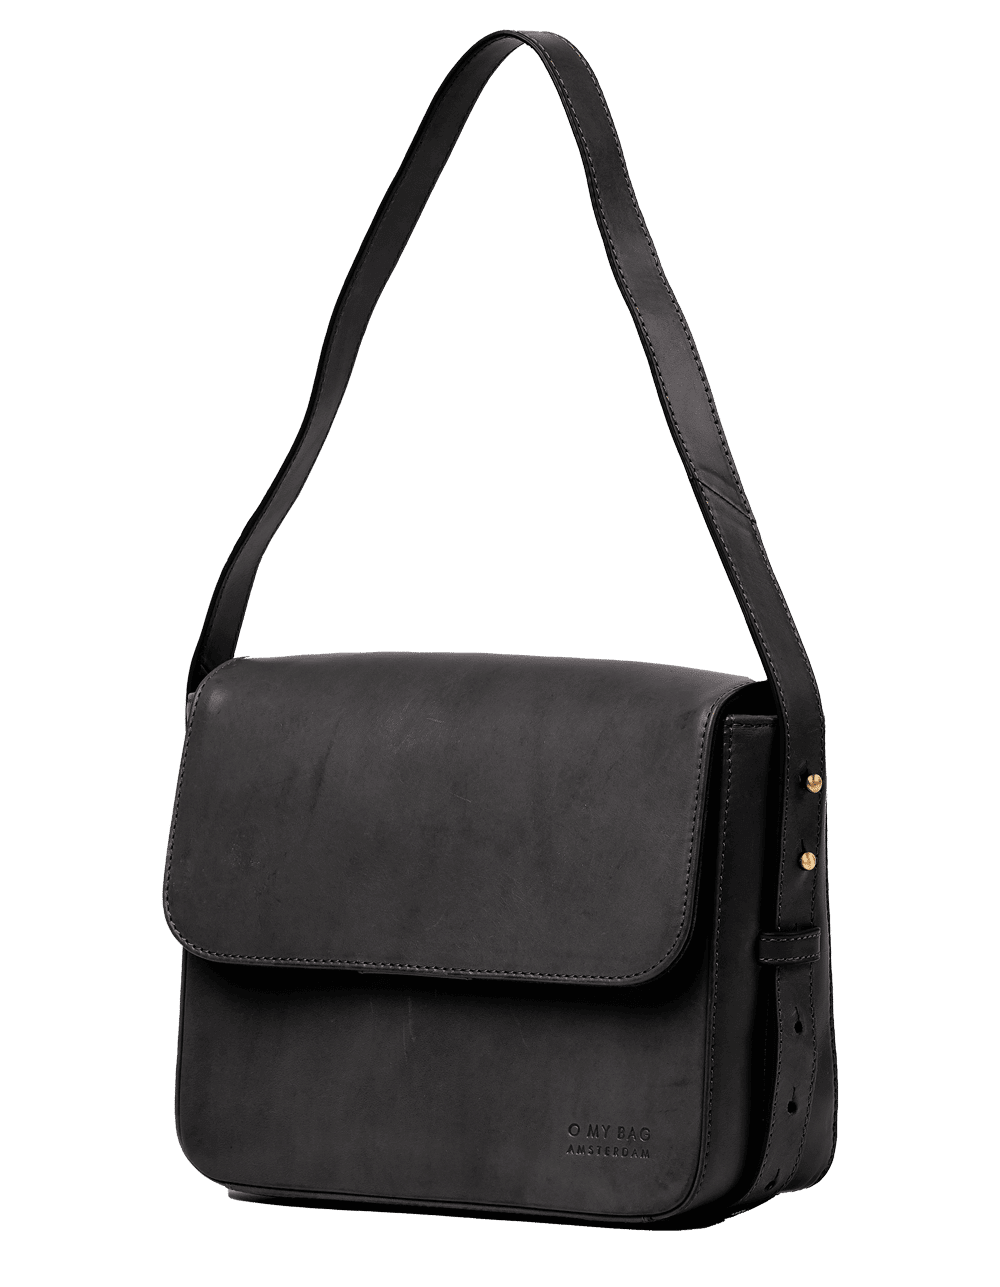 Oh My Bag Gina OMB-E136CV